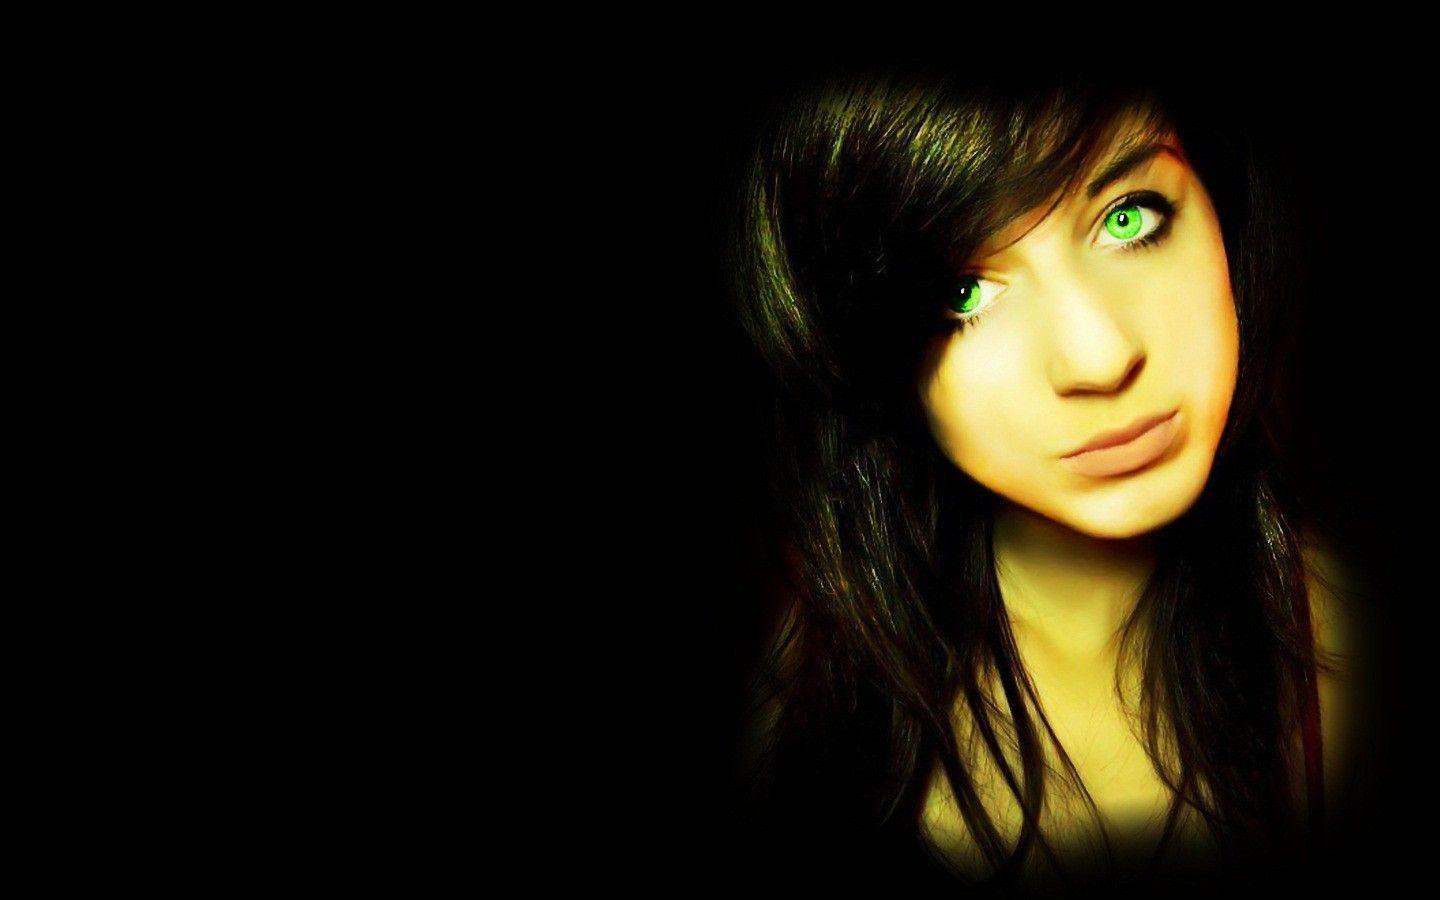 Green Eyes Wallpaper, The Image Dark Green Eyes Wallpaper